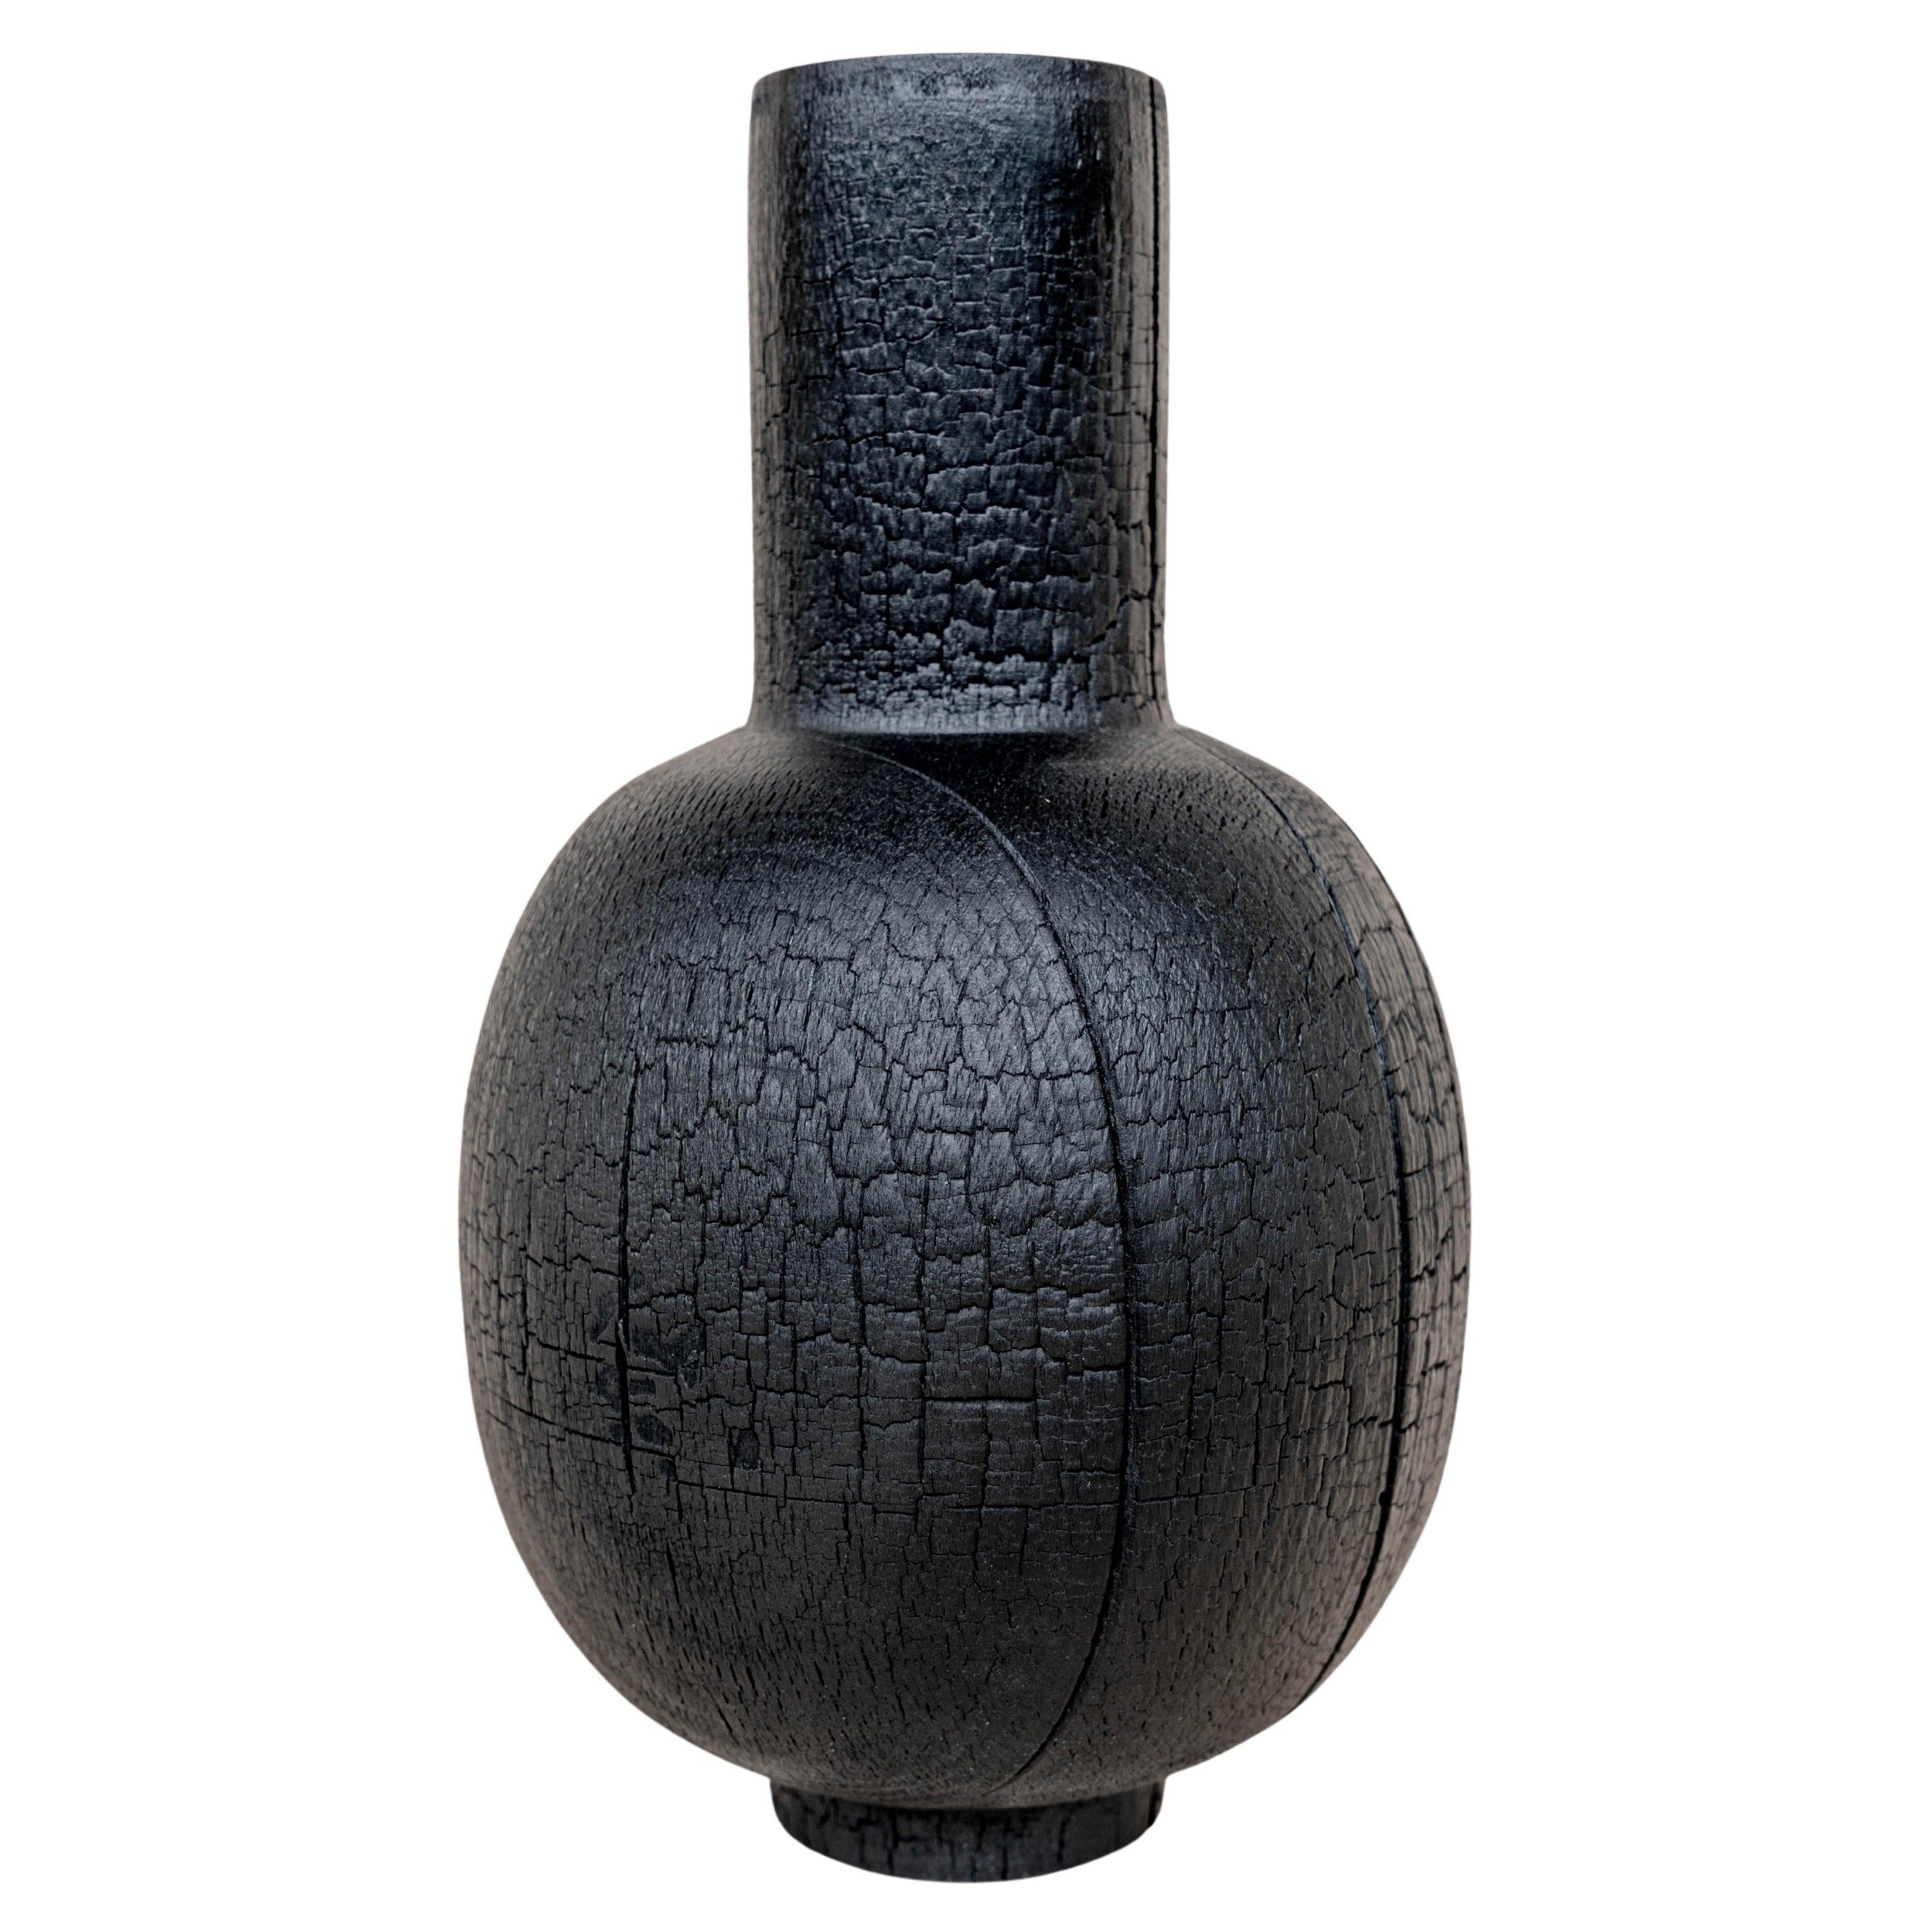 Burnt Vase XL #4 by Daniel Elkayam